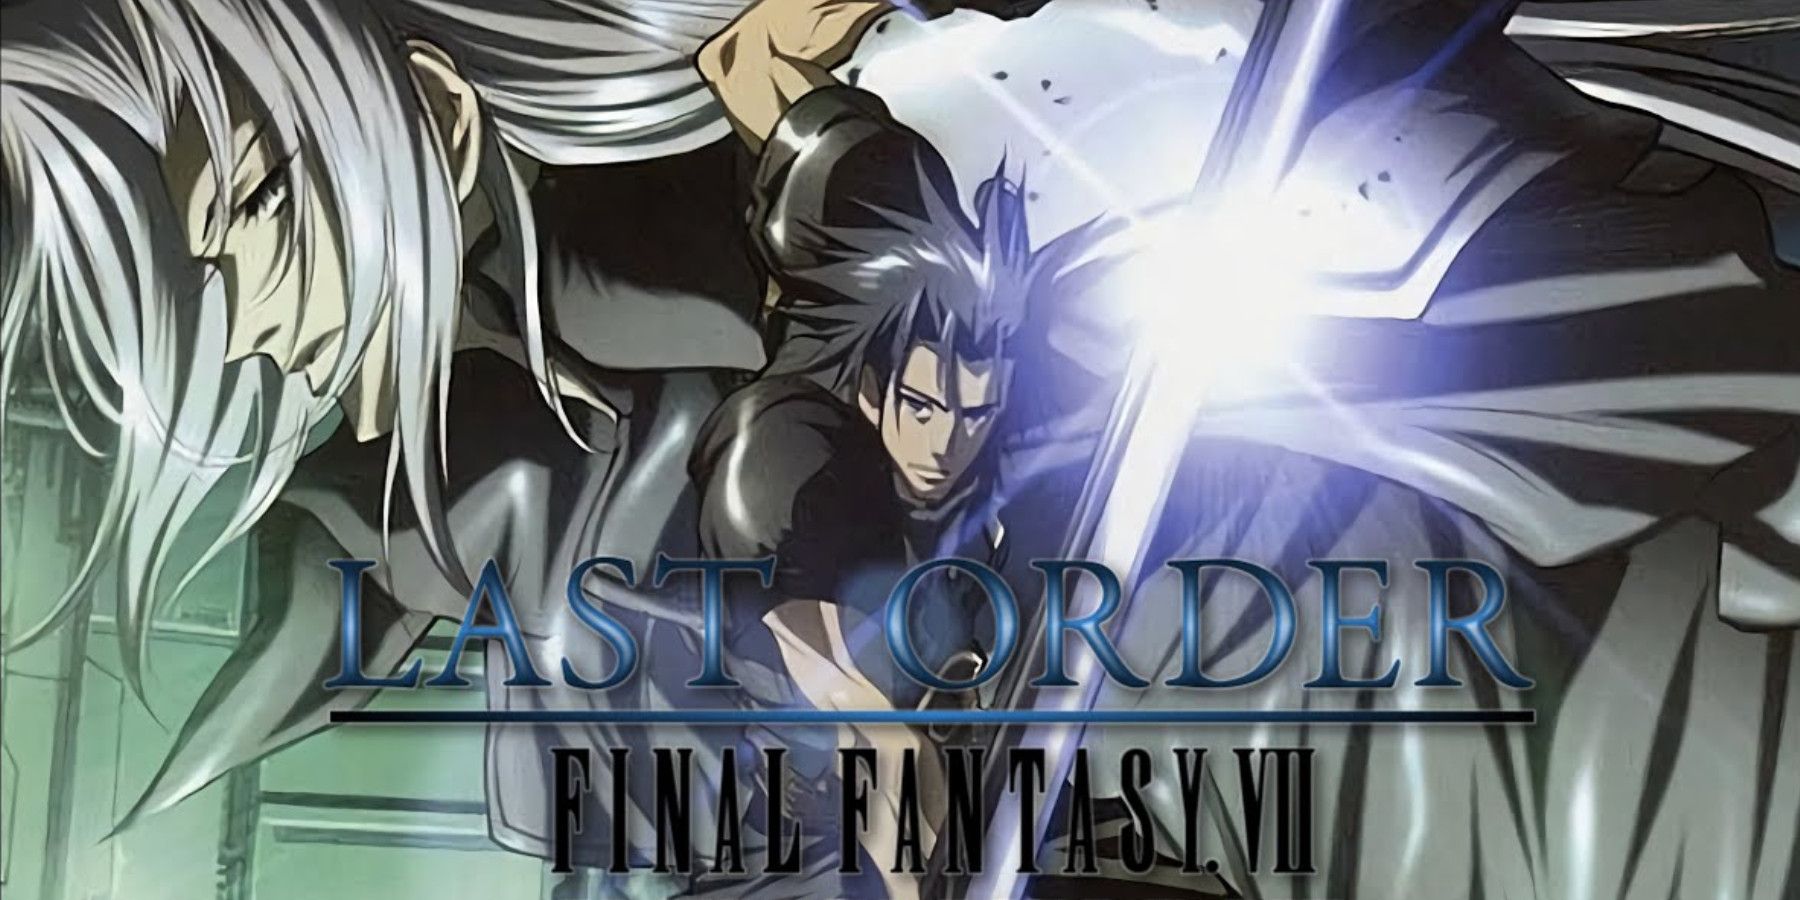 ffvii-anime-last-order-poster